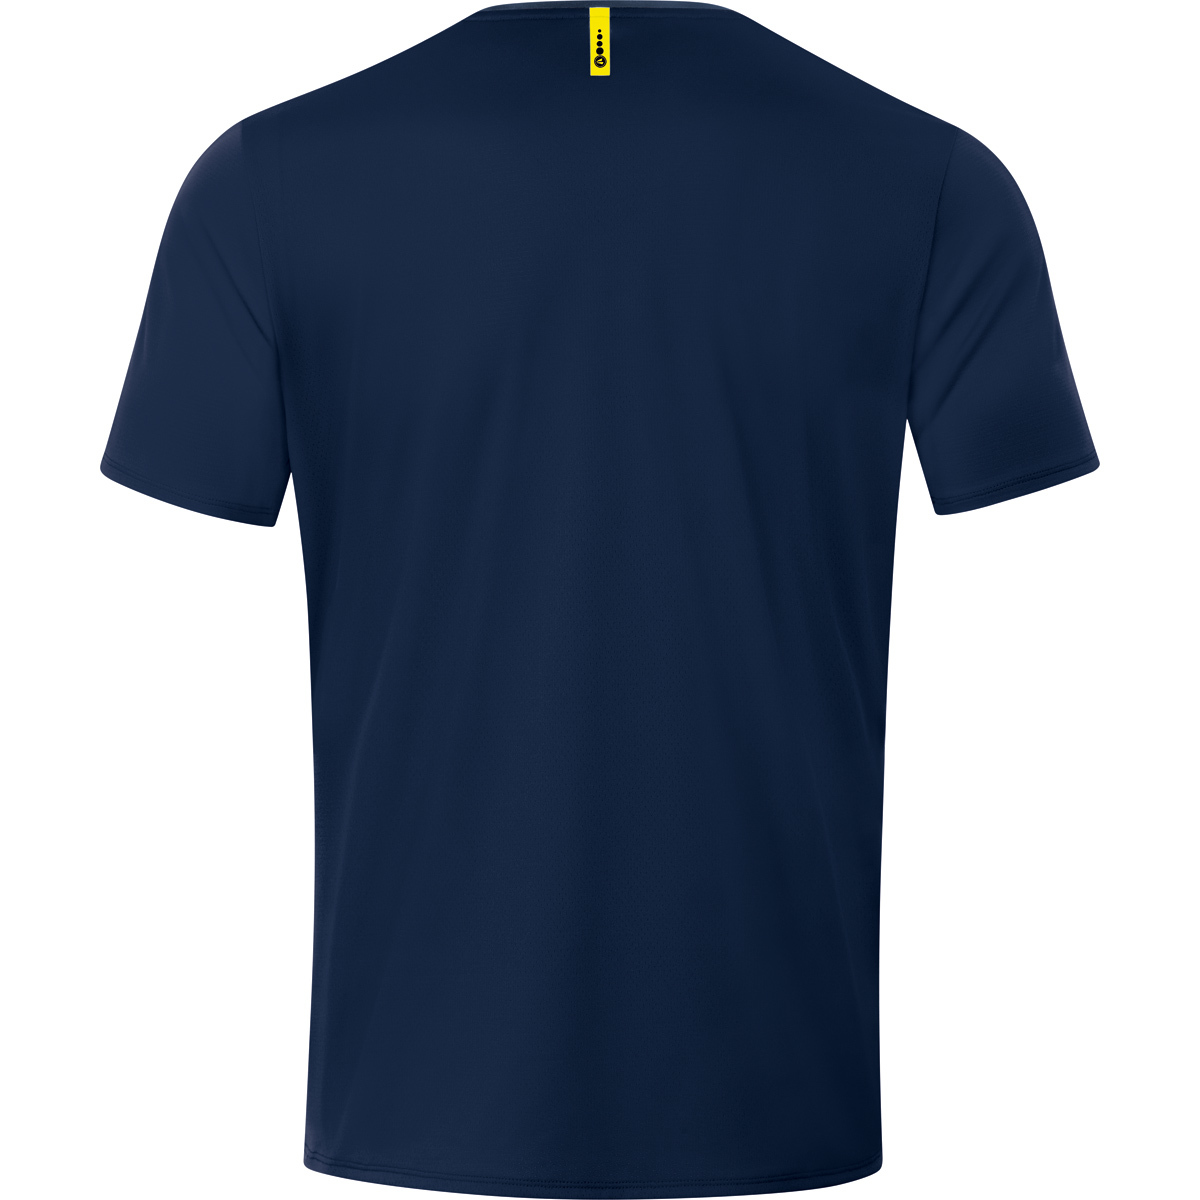 JAKO T-Shirt Champ 2.0 marine/darkblue/neongelb, 6120 Herren, Gr. XXL